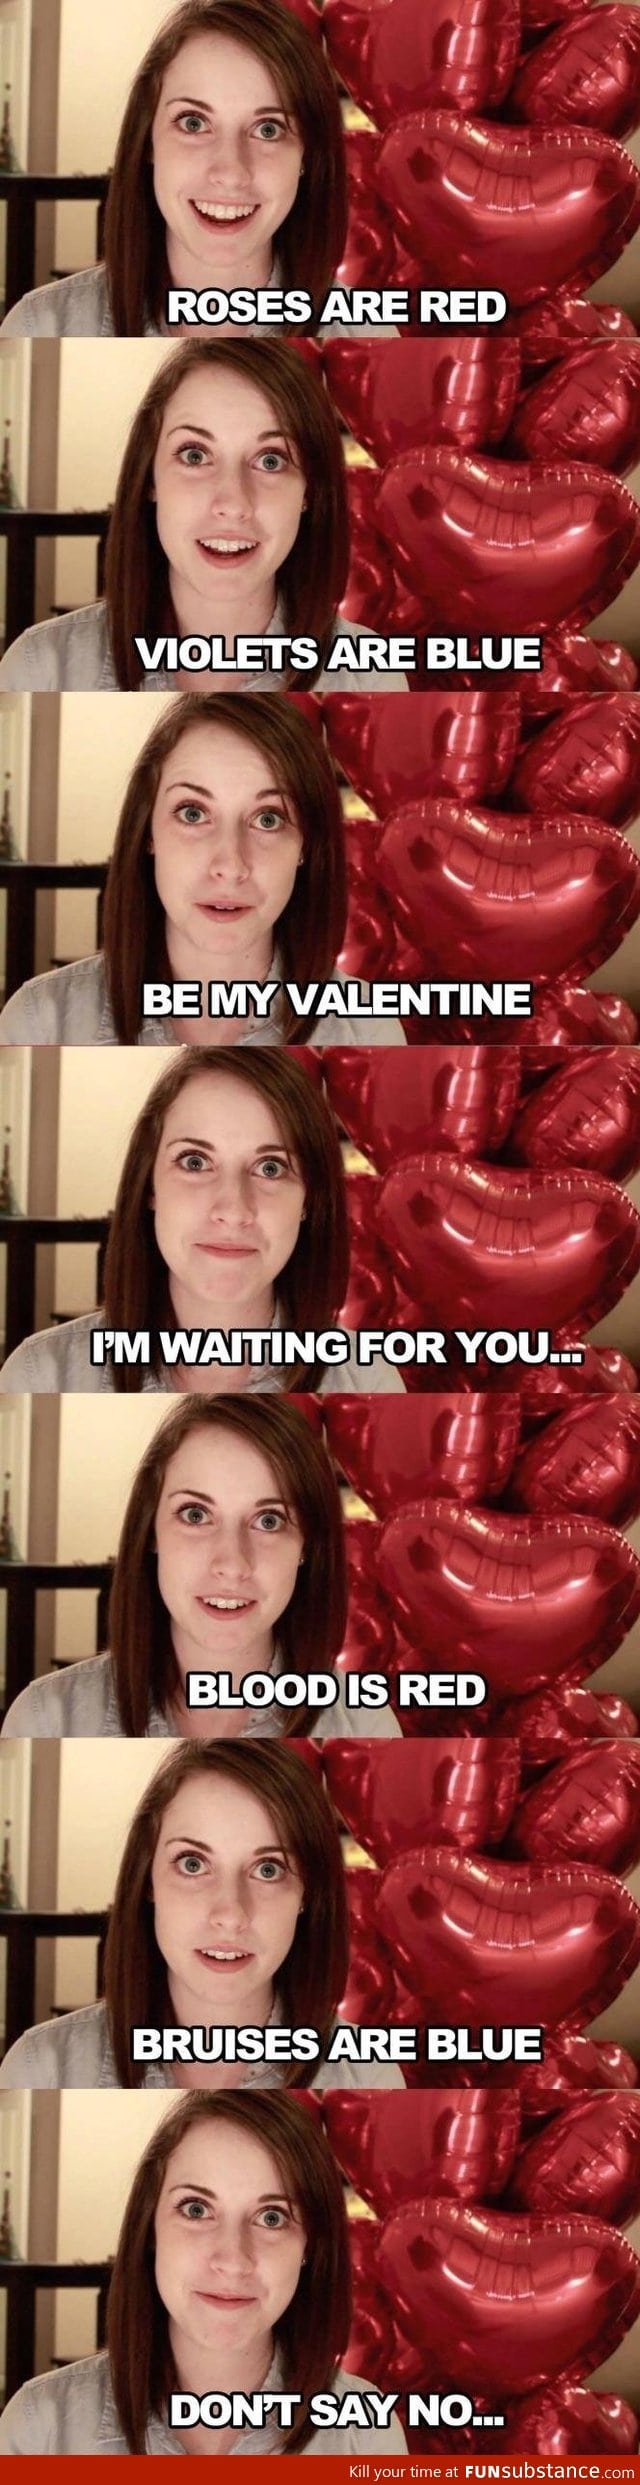 Overly attached girlfriend's valentine message